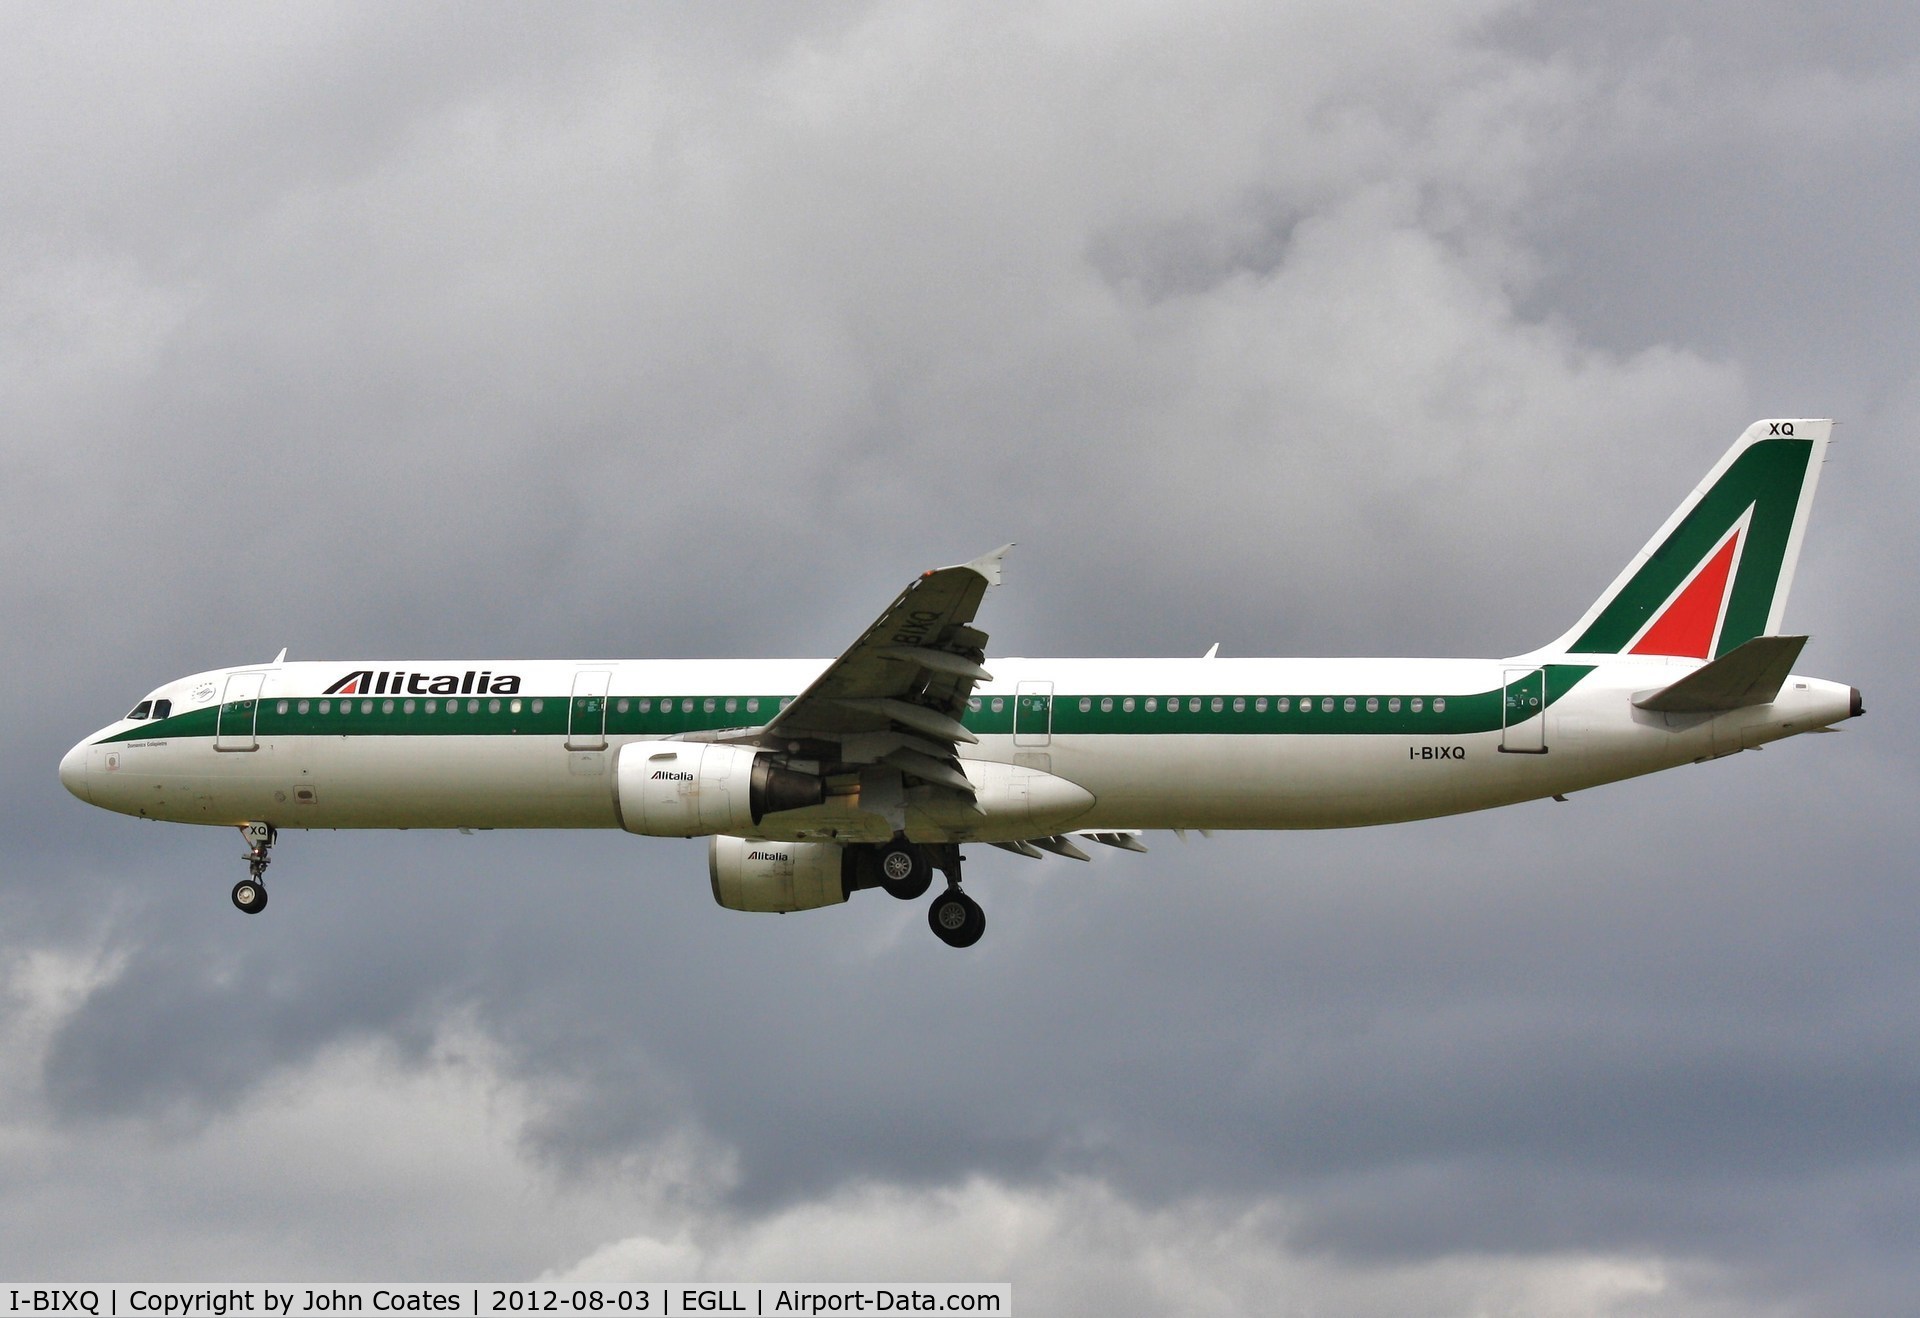 I-BIXQ, 1996 Airbus A321-112 C/N 586, Finals to 27R